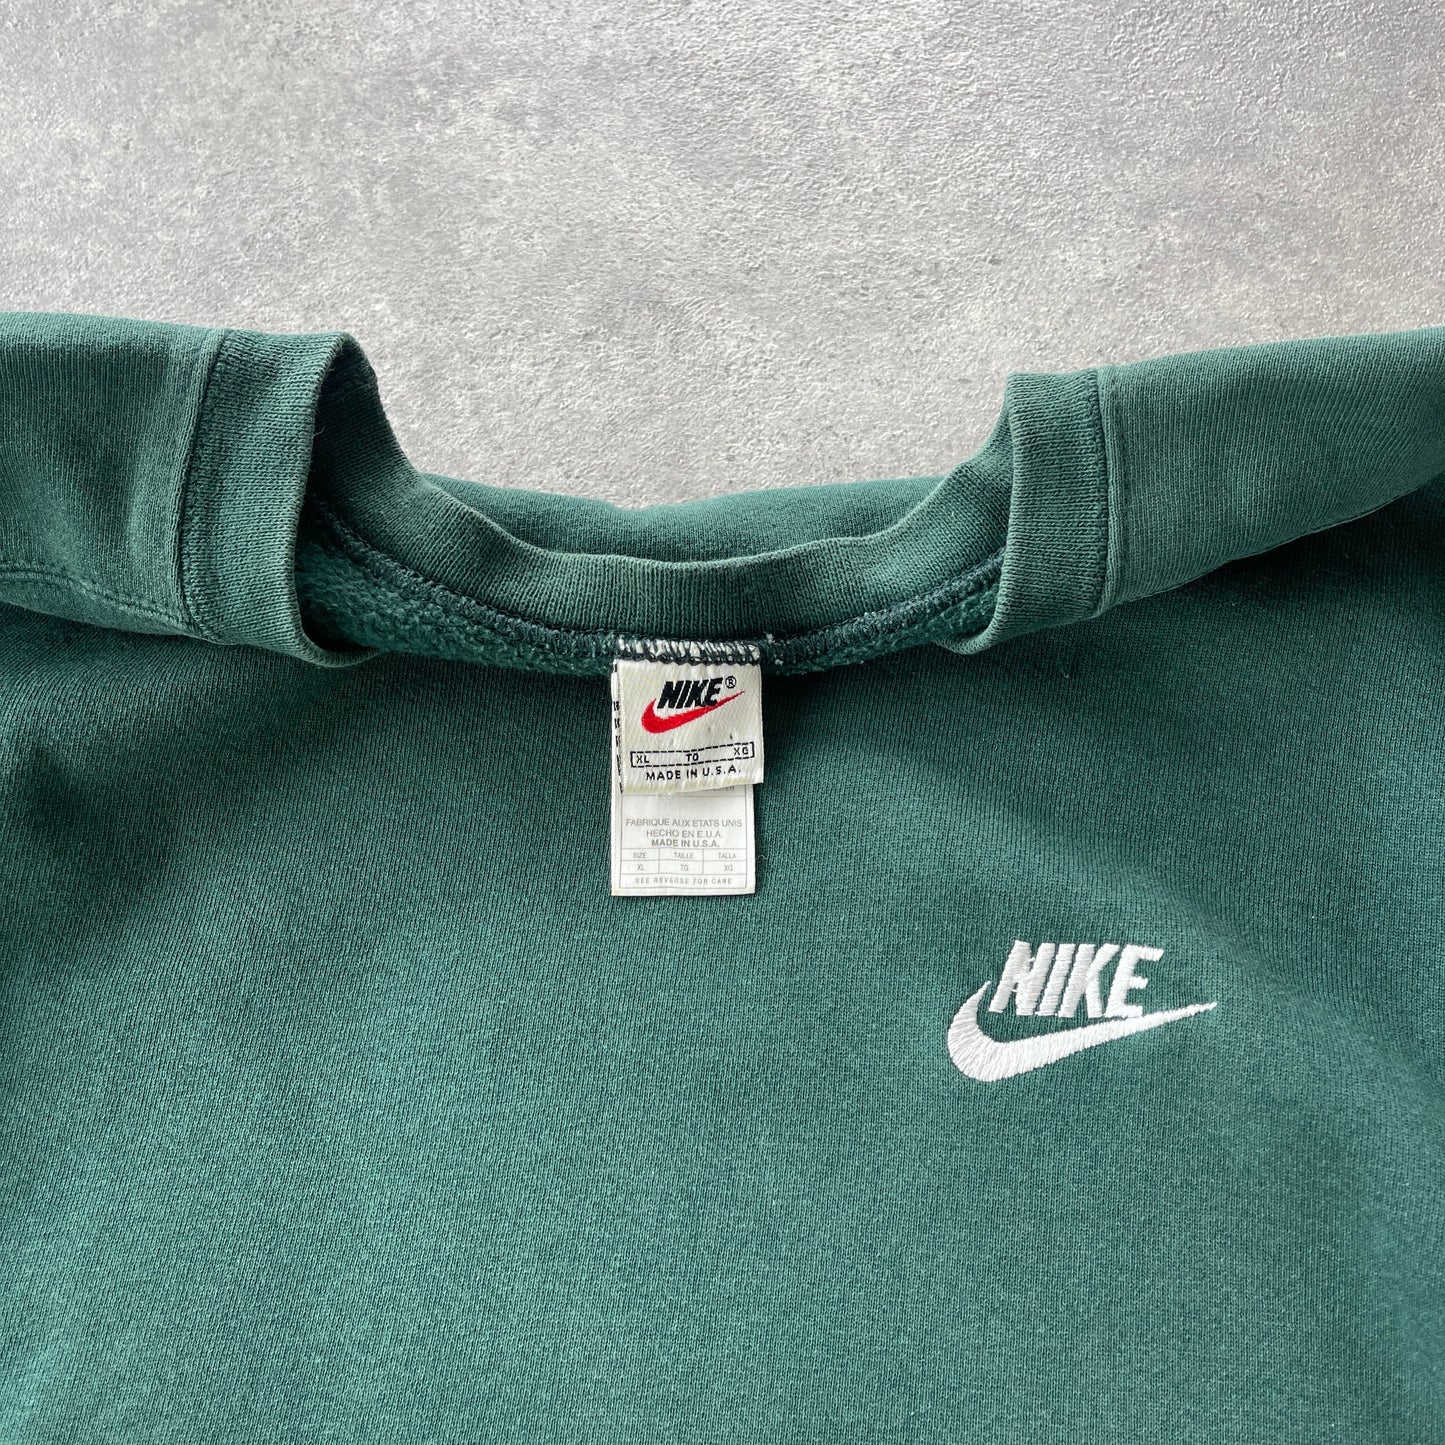 Nike 1990s heavyweight embroidered sweatshirt (XL)